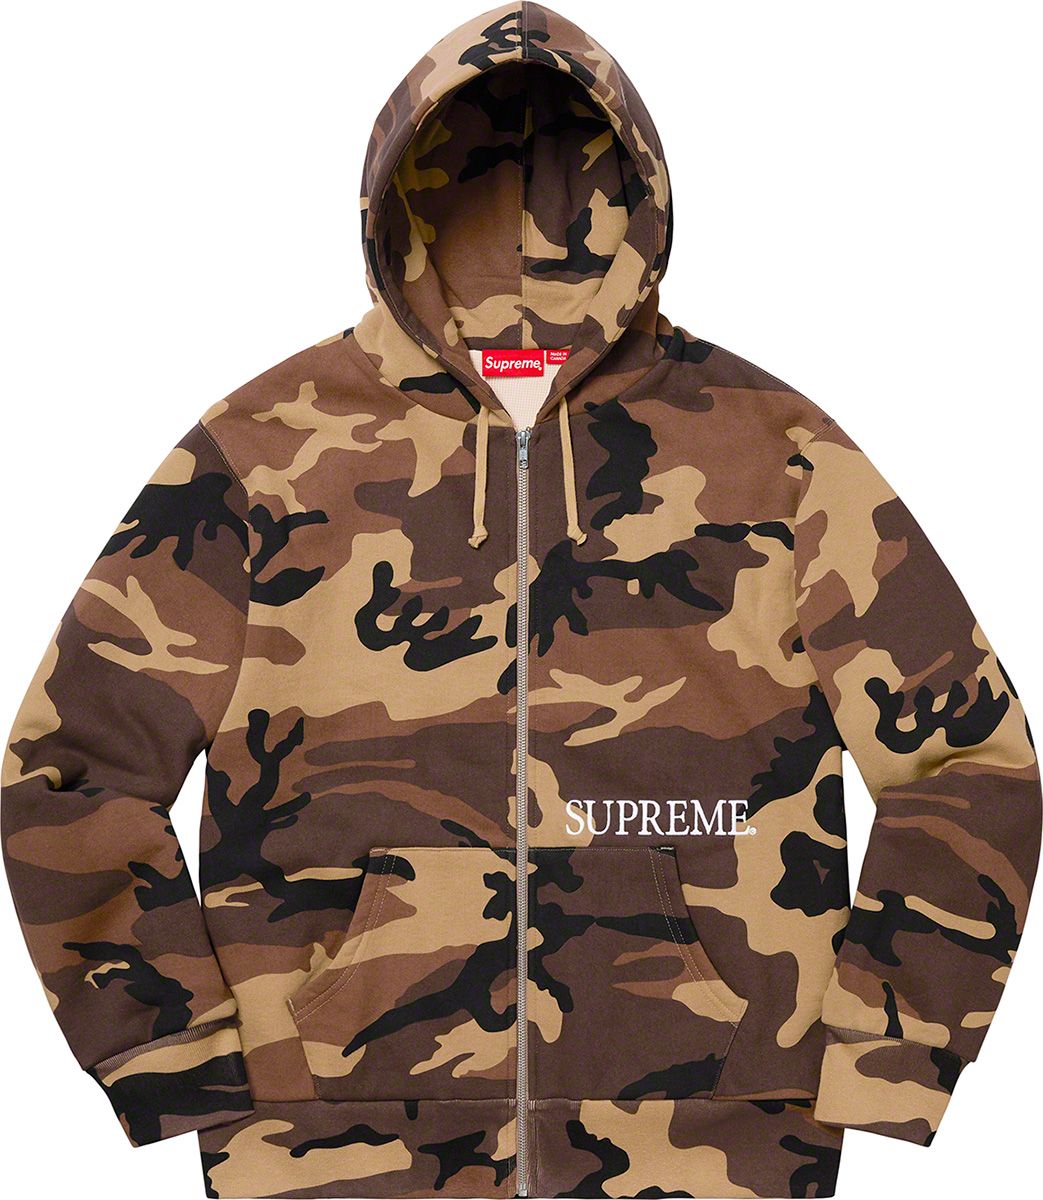 Thermal Zip Up Hooded Sweatshirt – Supreme